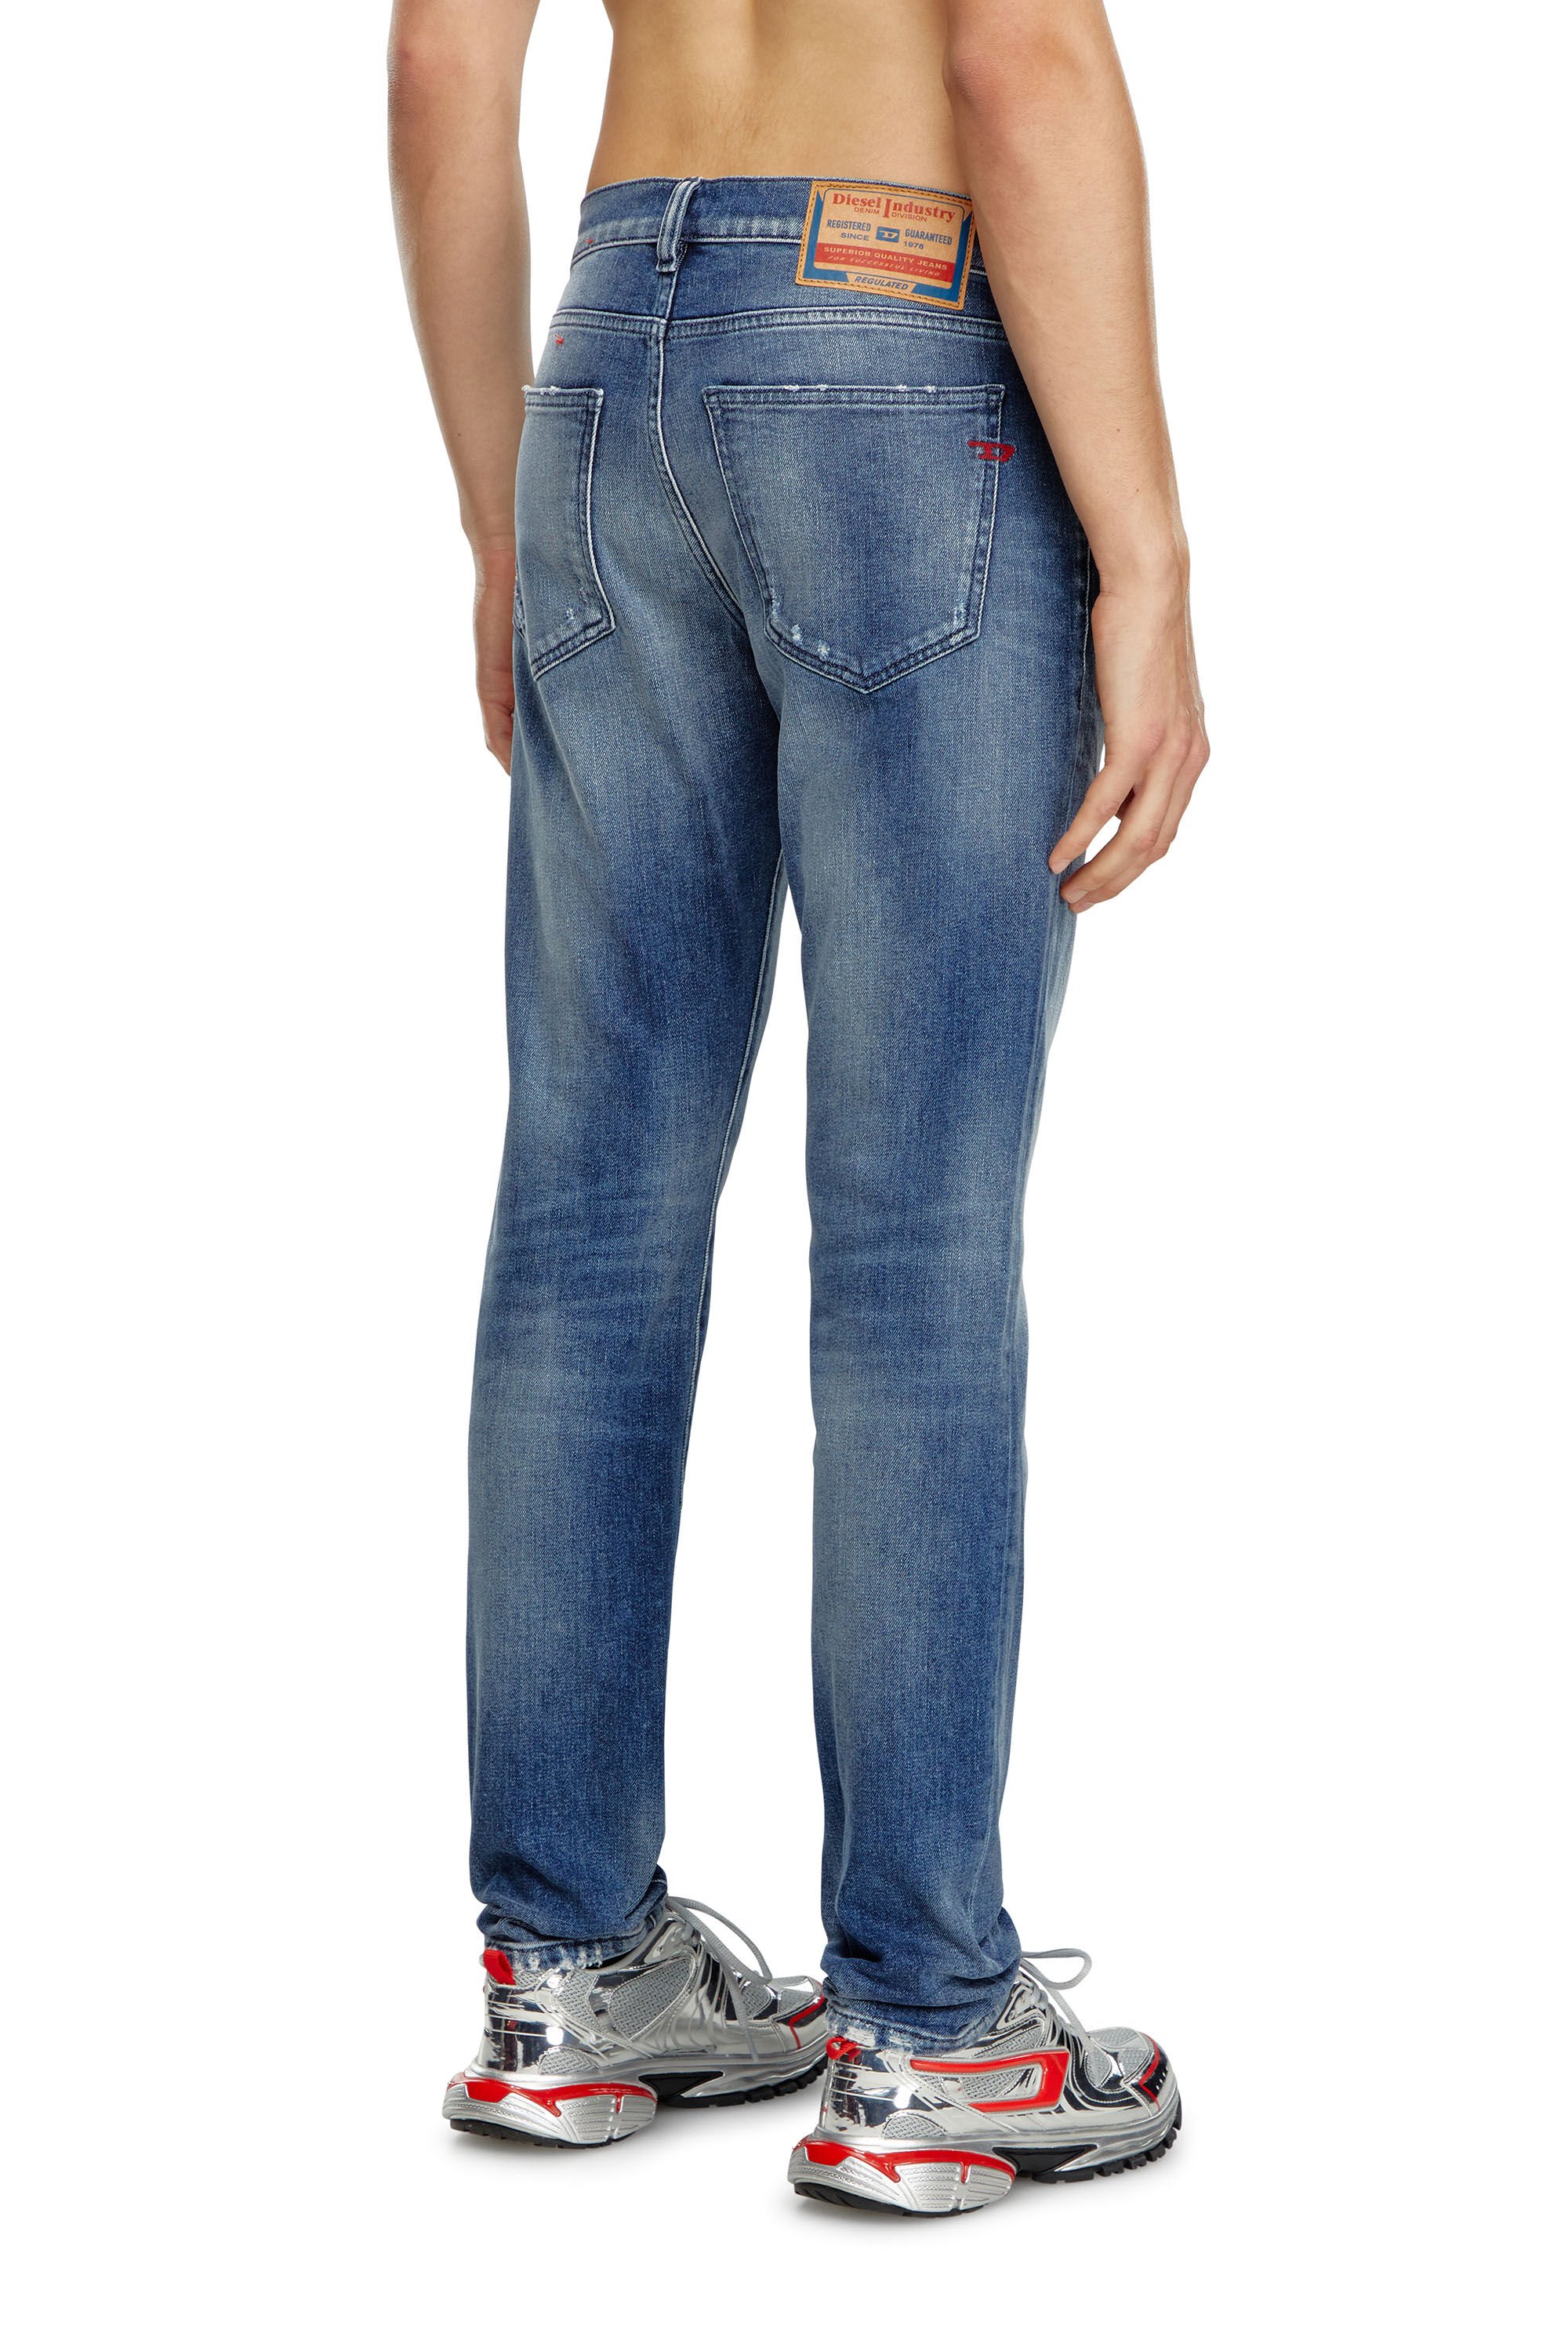 Diesel - Slim Jeans 2019 D-Strukt 09J61, Hombre Slim Jeans - 2019 D-Strukt in Azul marino - Image 4